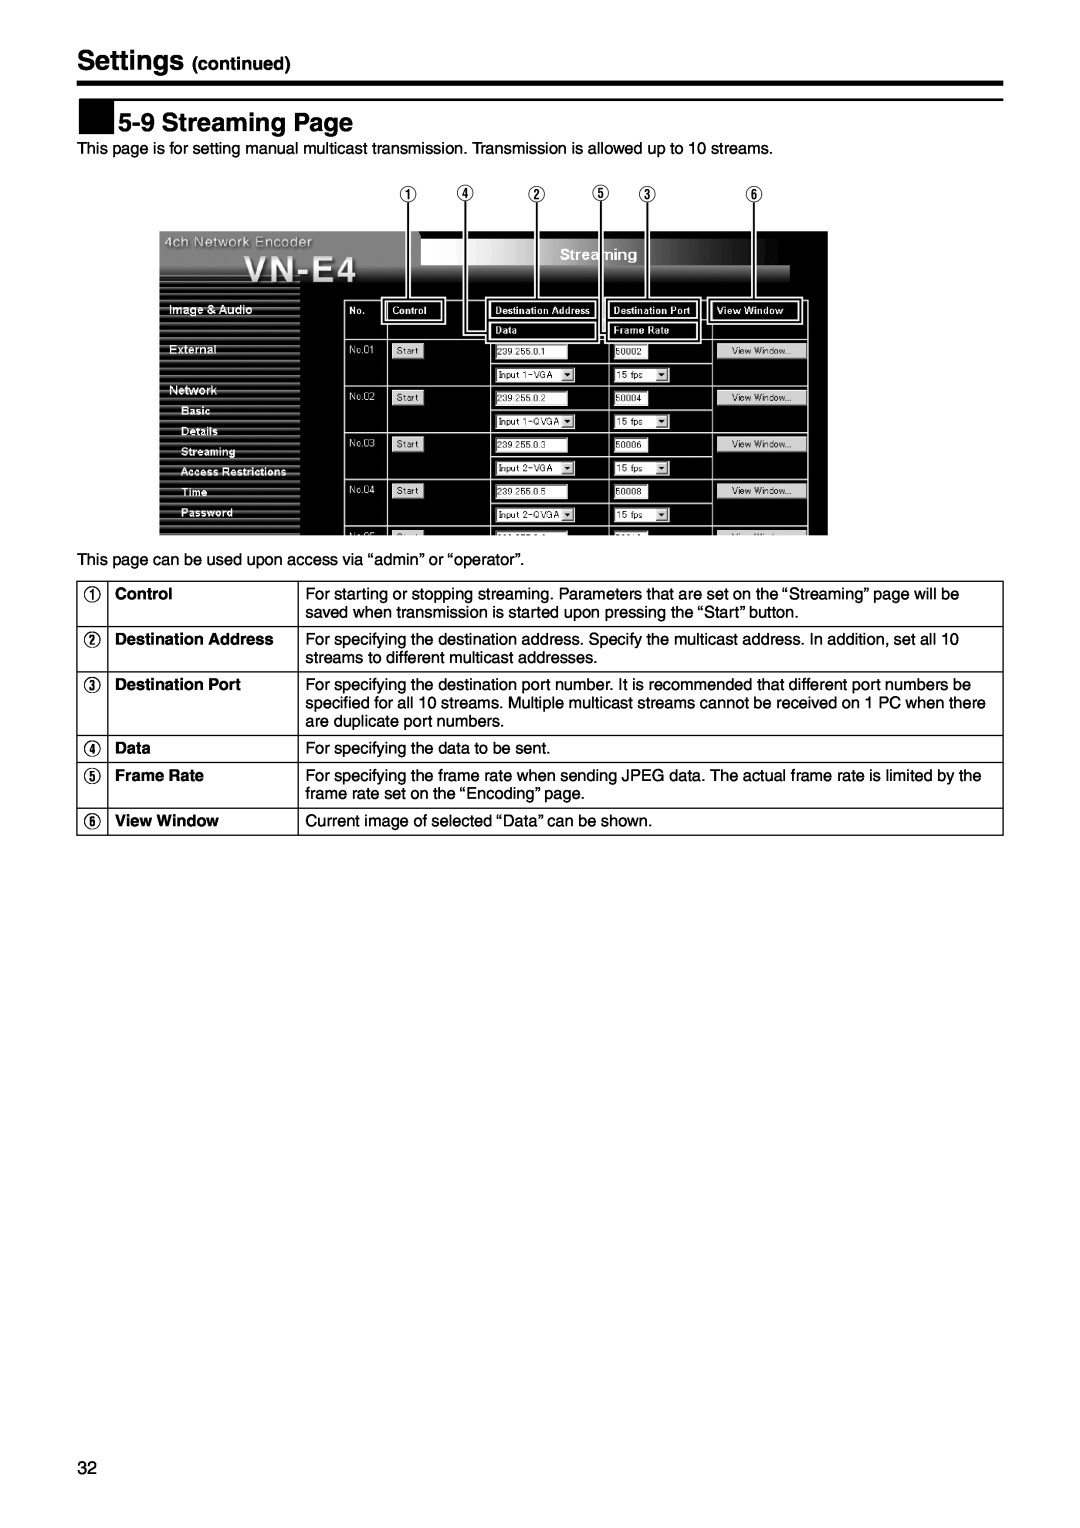 JVC VN-E4 manual  5-9 Streaming Page, Control, Destination Address, Destination Port, Data, Frame Rate, View Window 